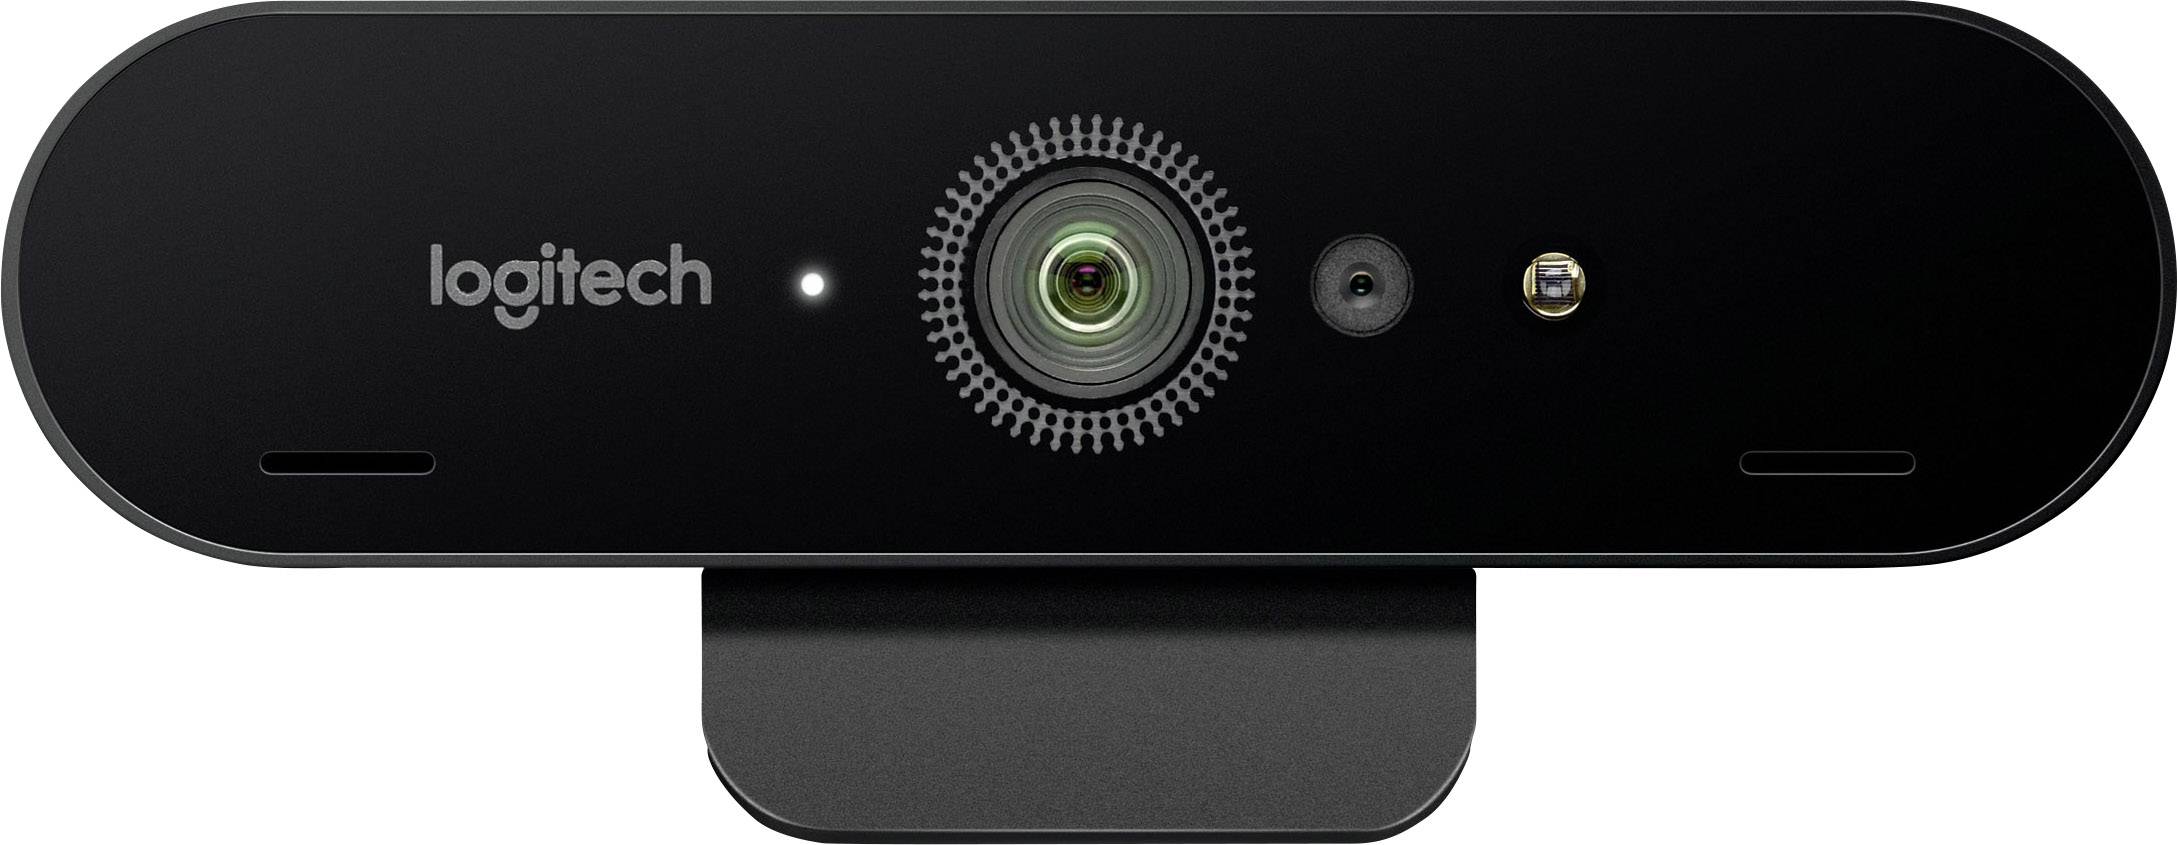 Логитеч брио. Веб-камера Logitech webcam Brio (960-001106).